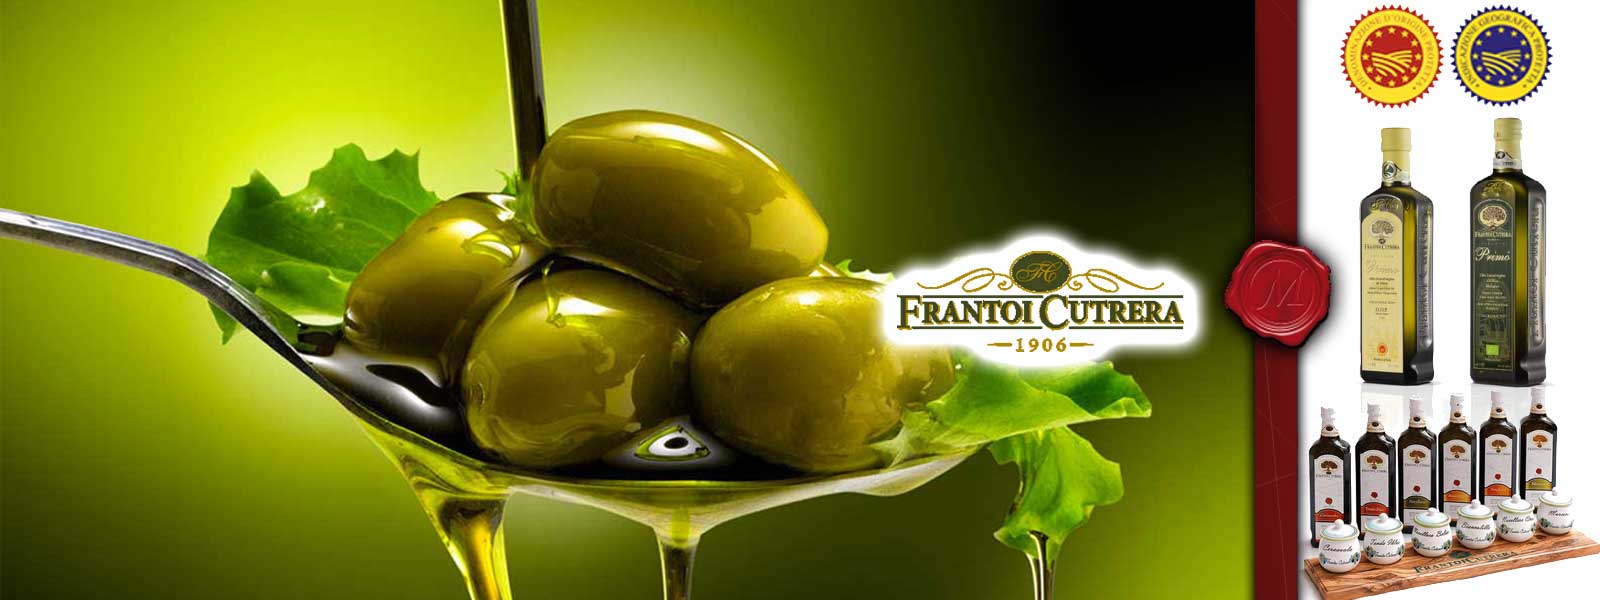 Olivenolie fra Frantoi Cutrera 